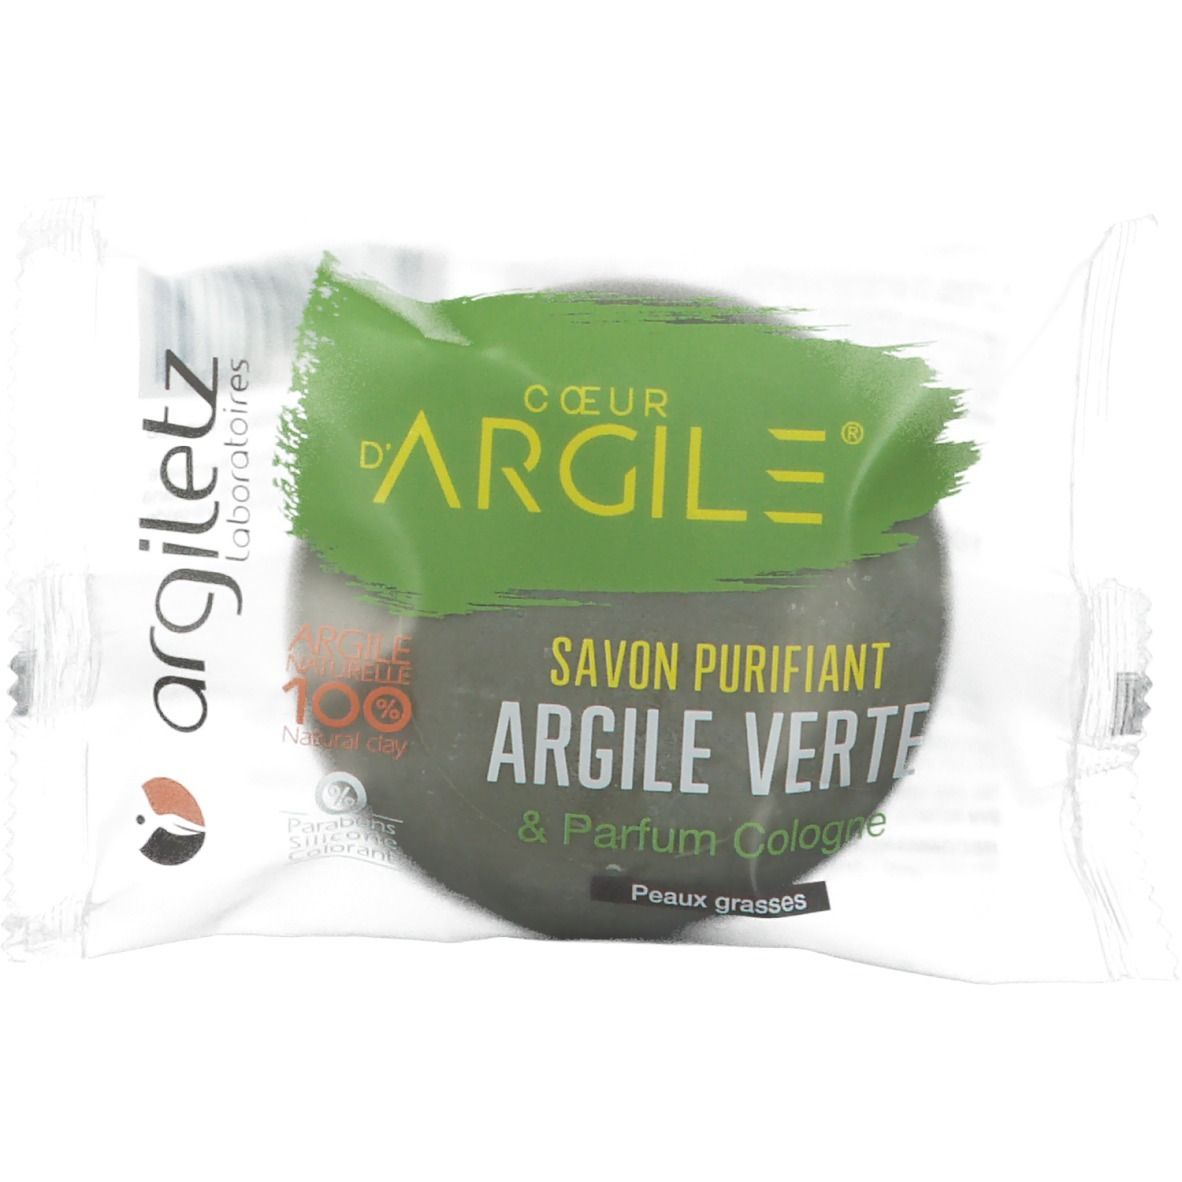 Image of argiletz Seife grüne Tonerde mit Parfum Cologne